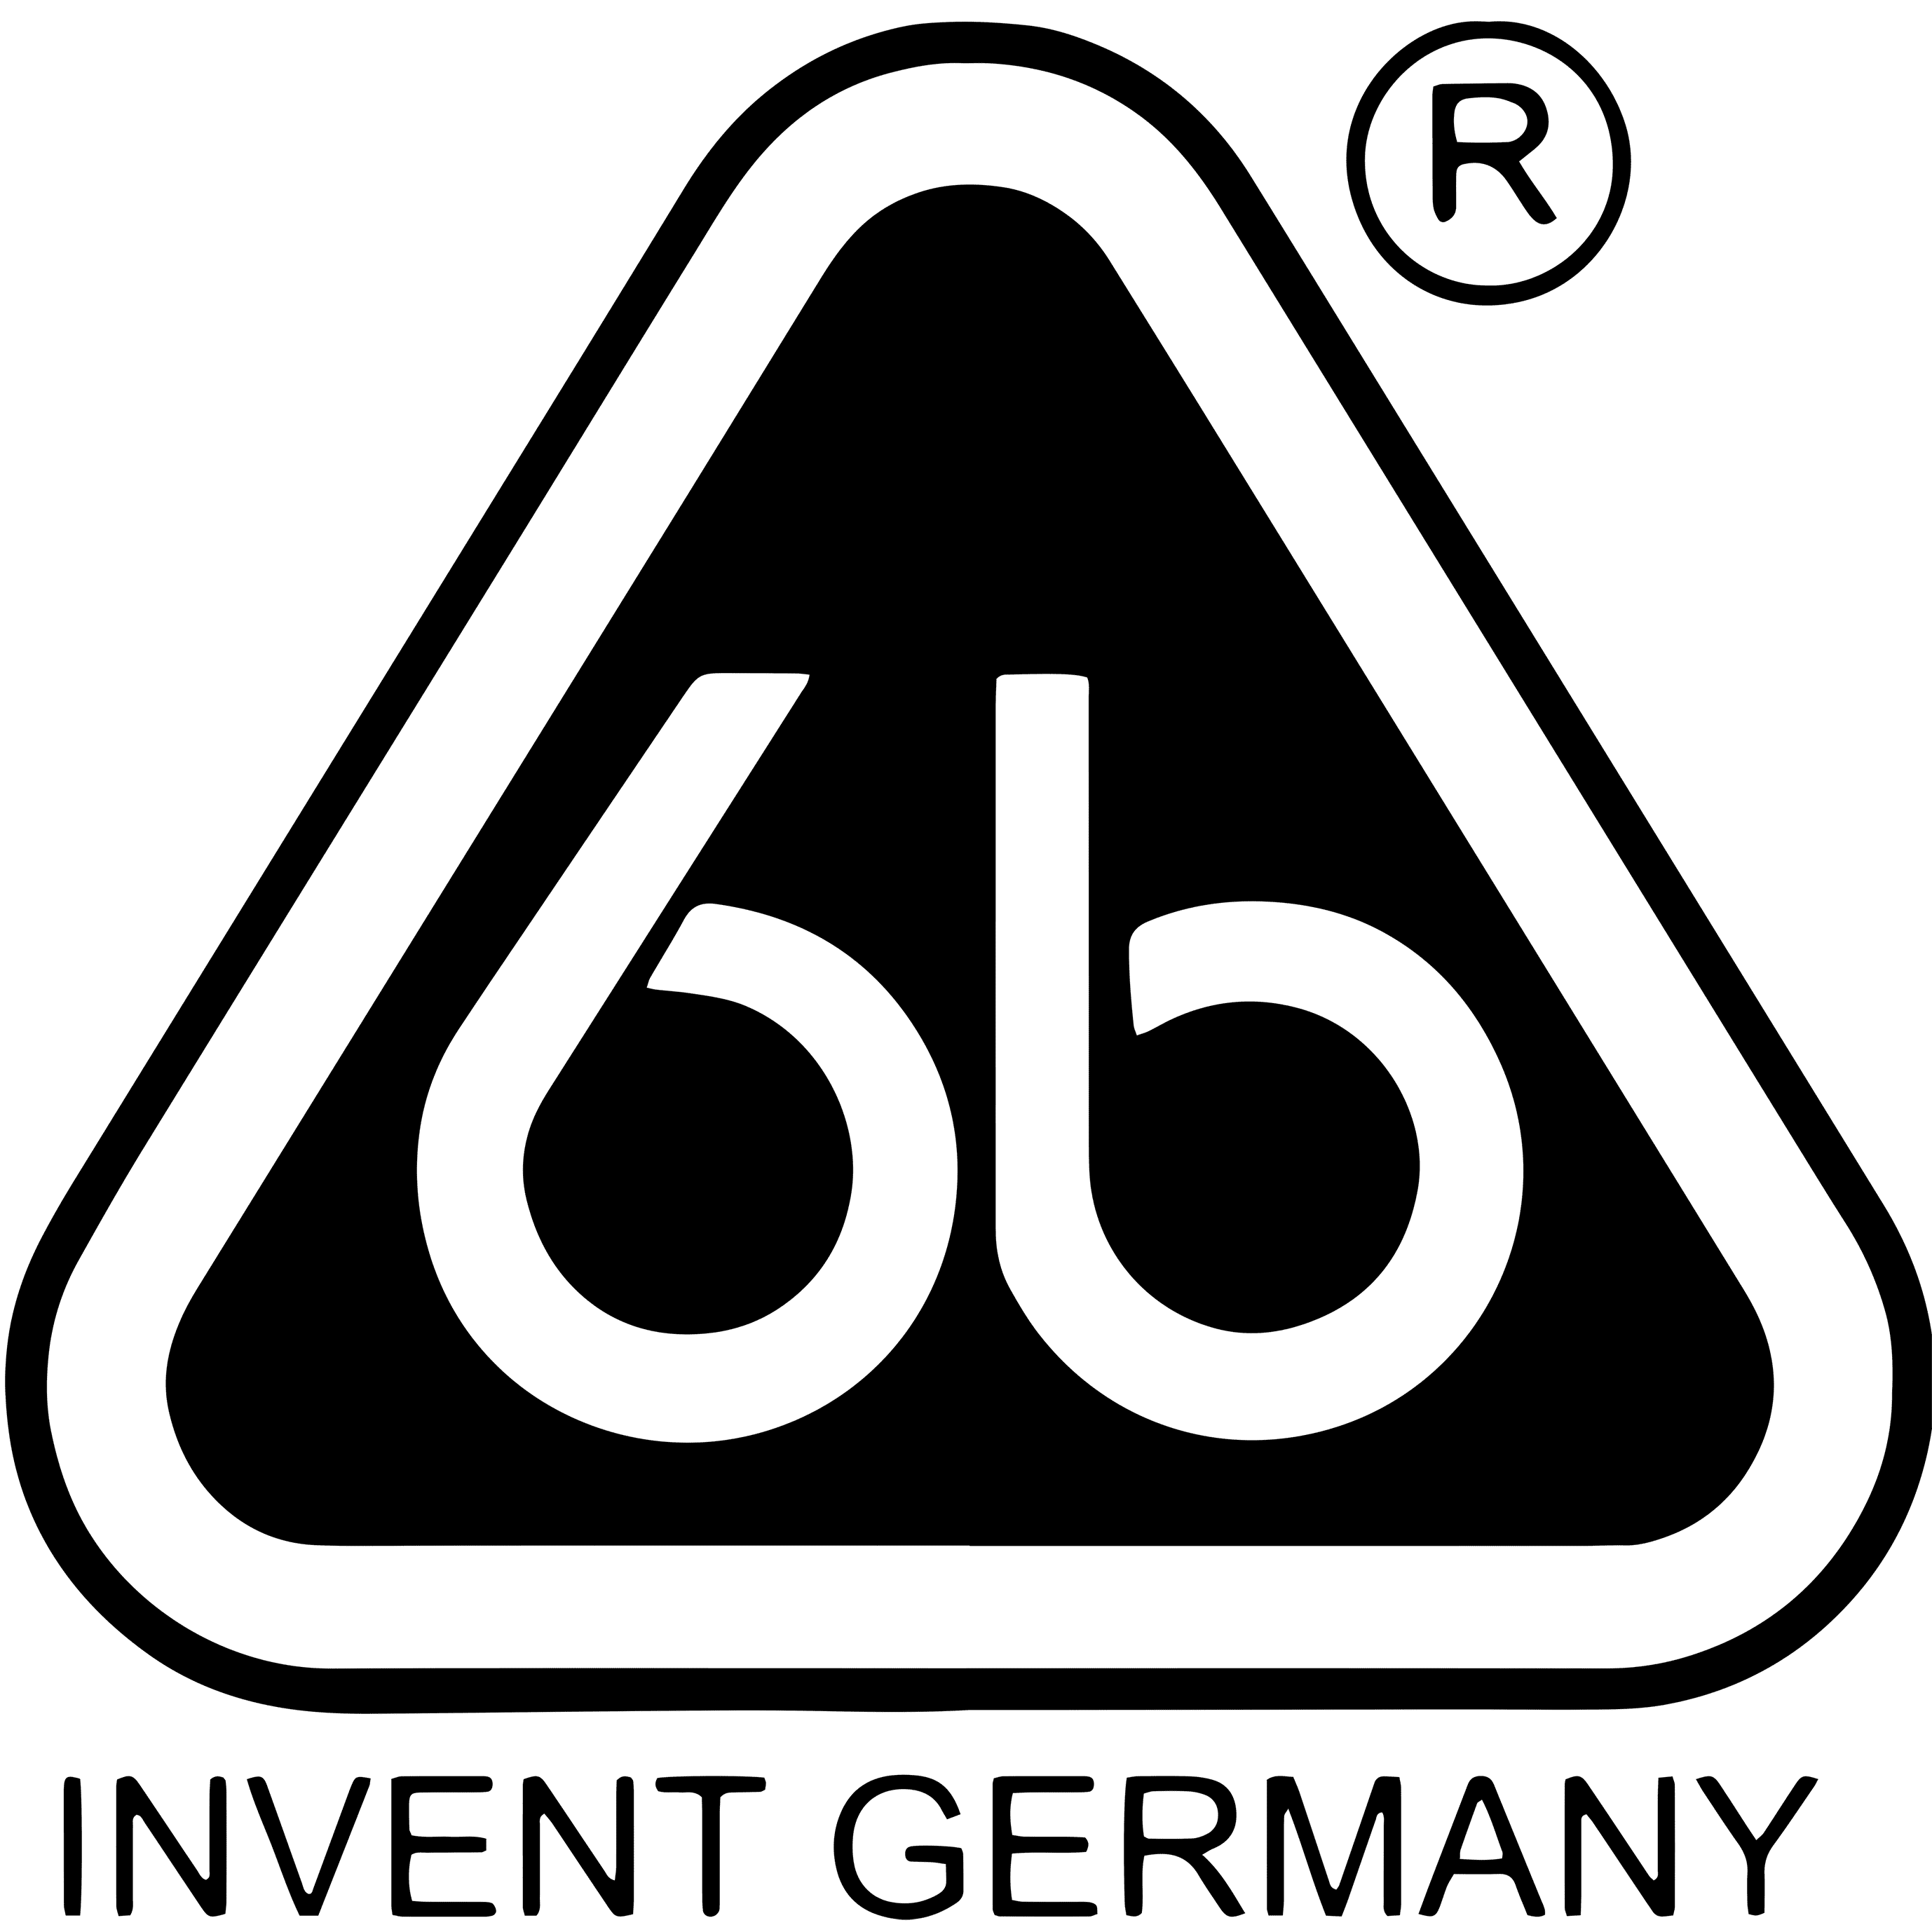 6B Invent Germany